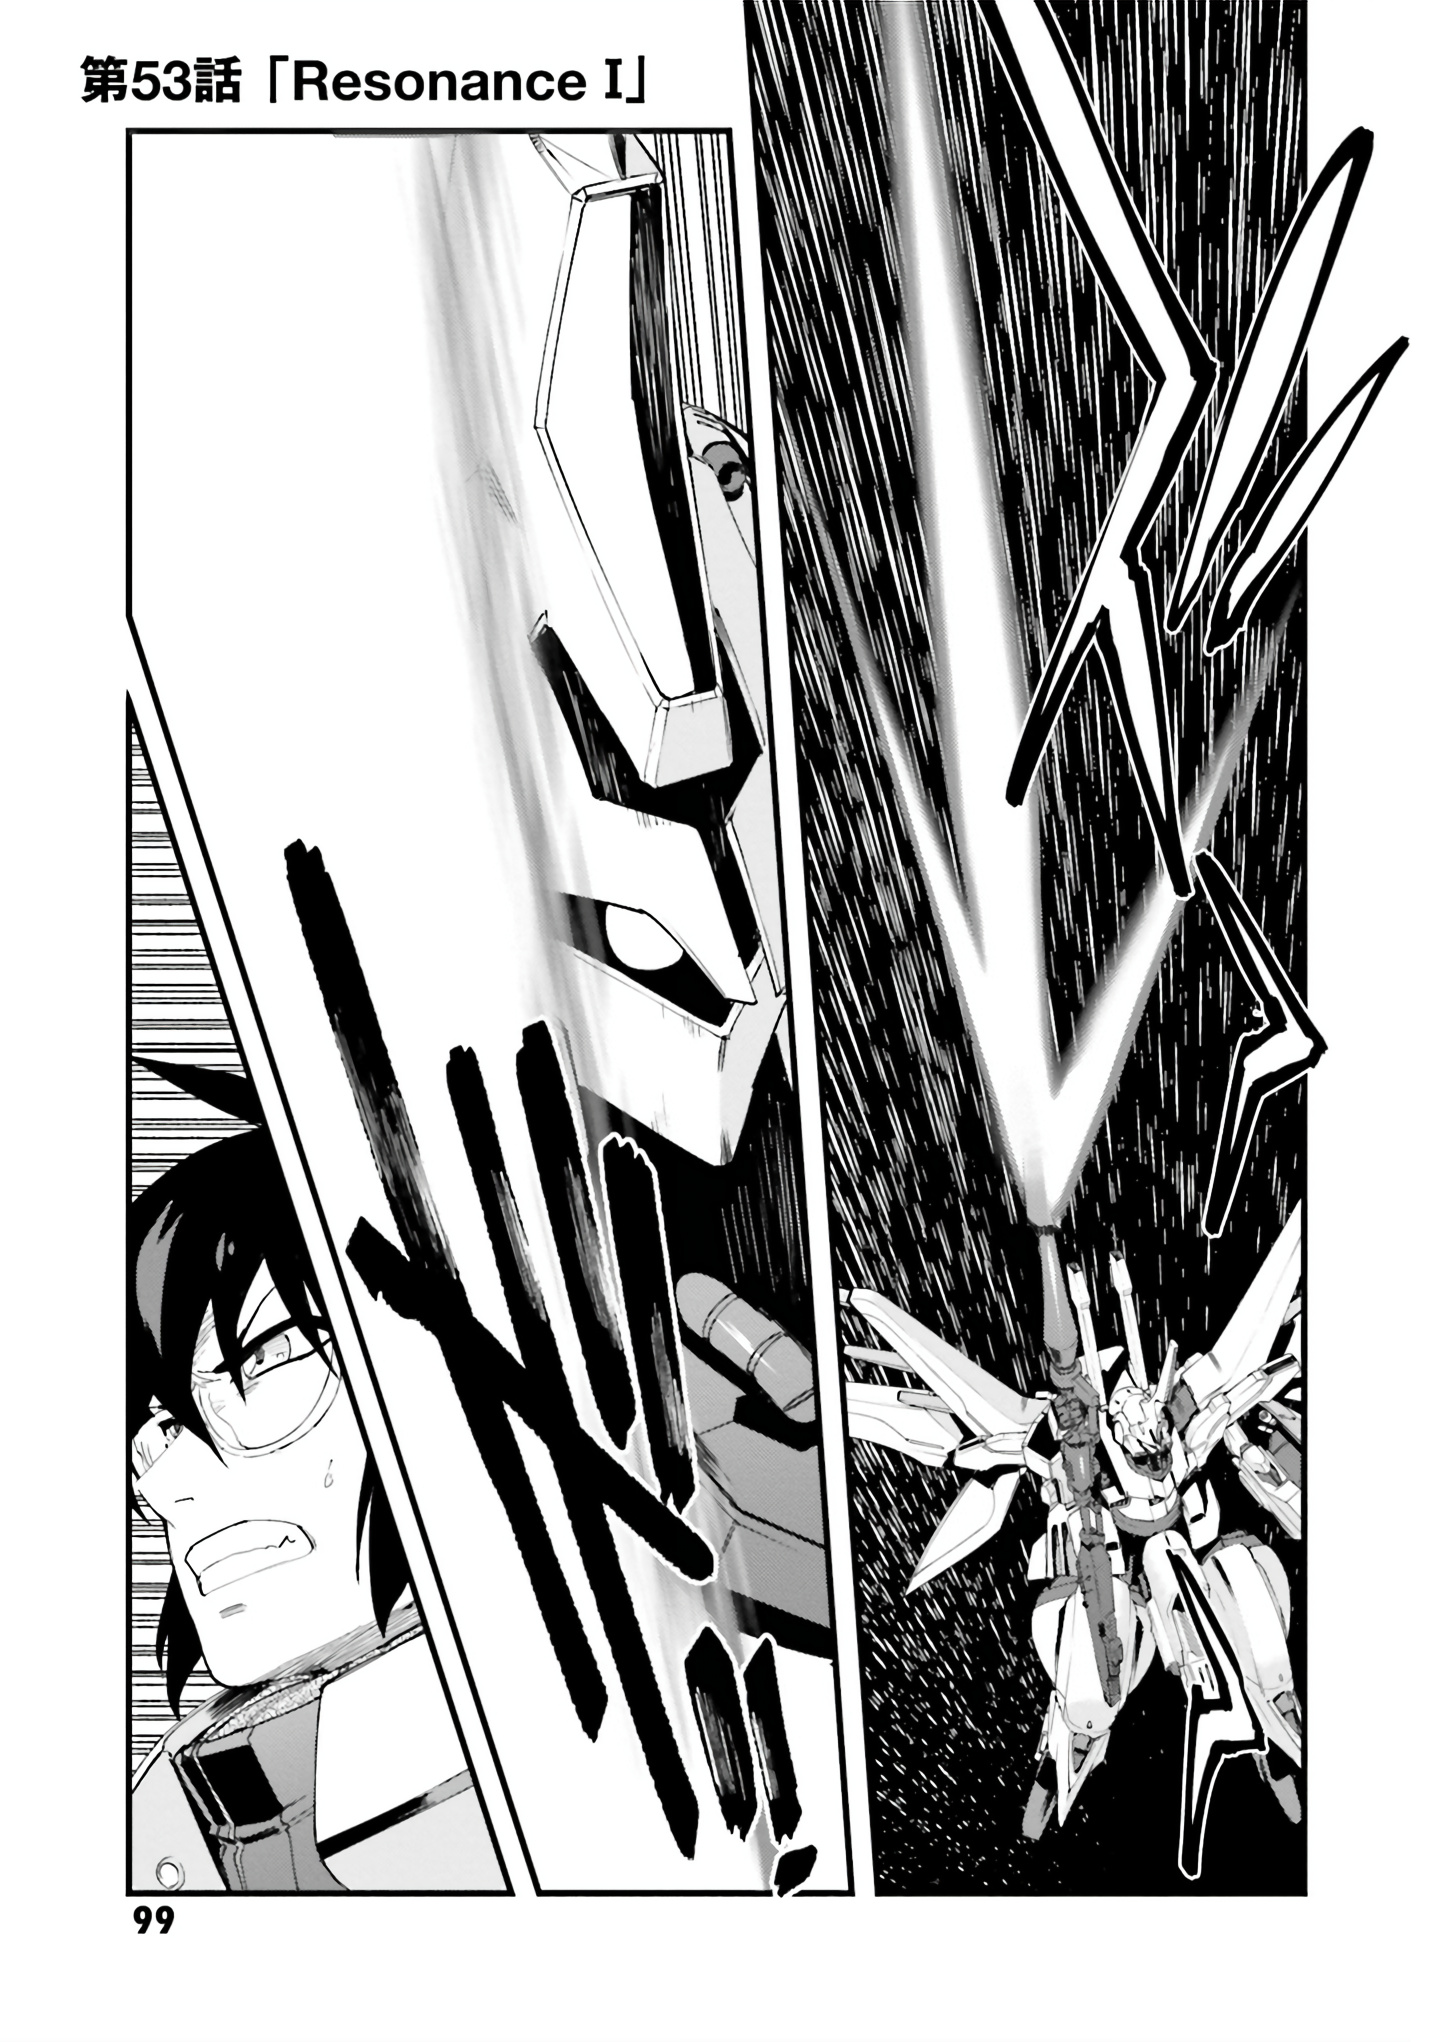 Mobile Suit Gundam Walpurgis Vol.10 Chapter 53: Resonance I - Picture 1